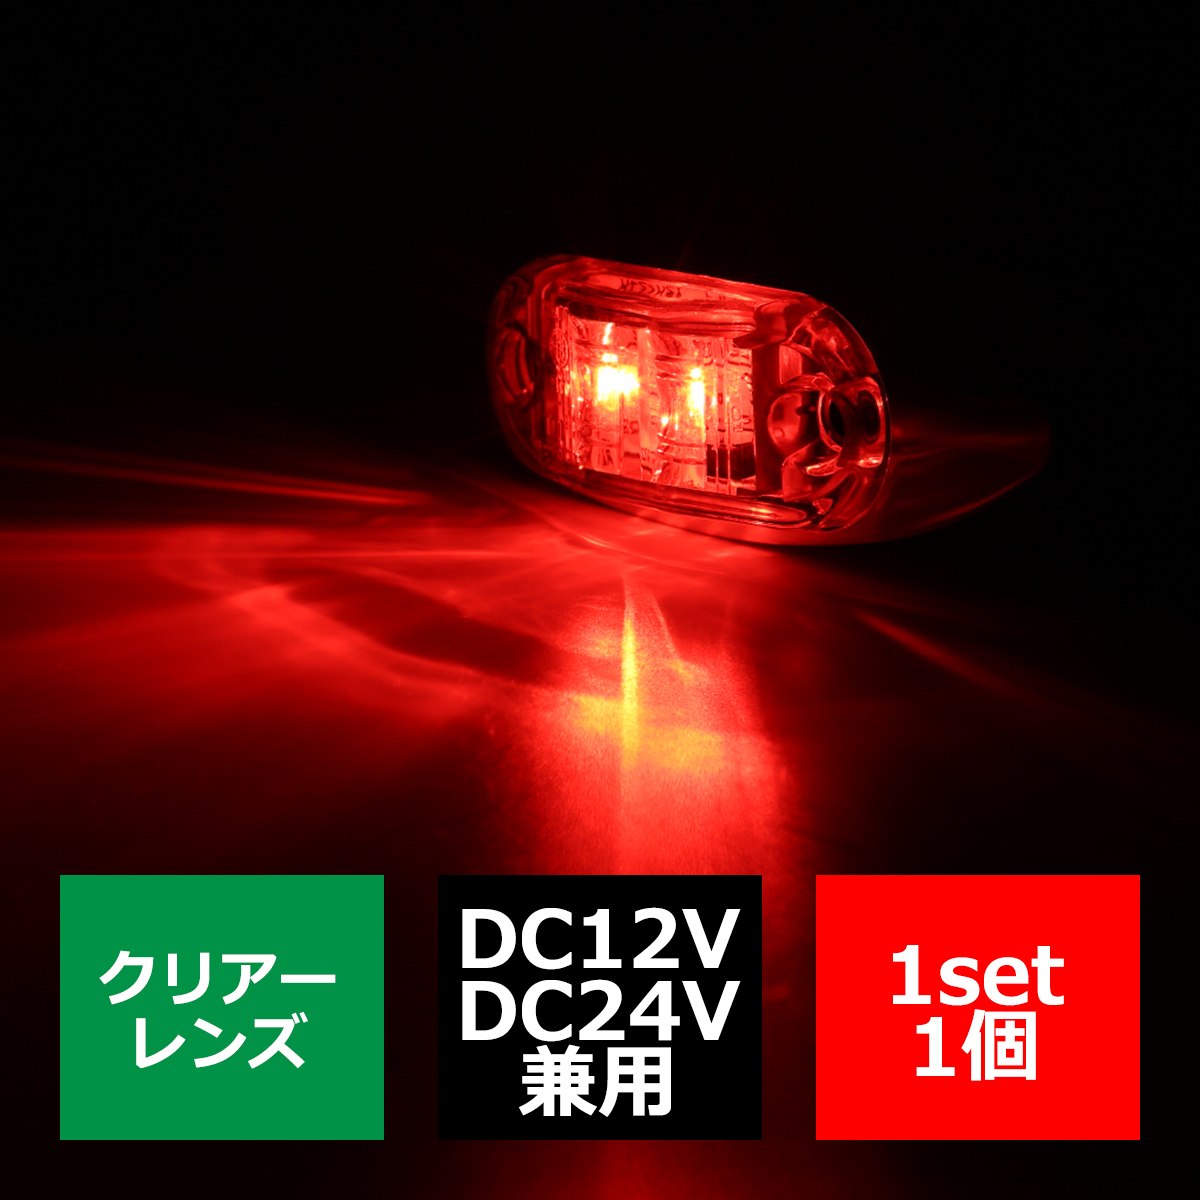 12V/24V 汎用 小型LEDクロムメッキ マーカー ランプ 防水 クリアーレンズ レッド FZ137